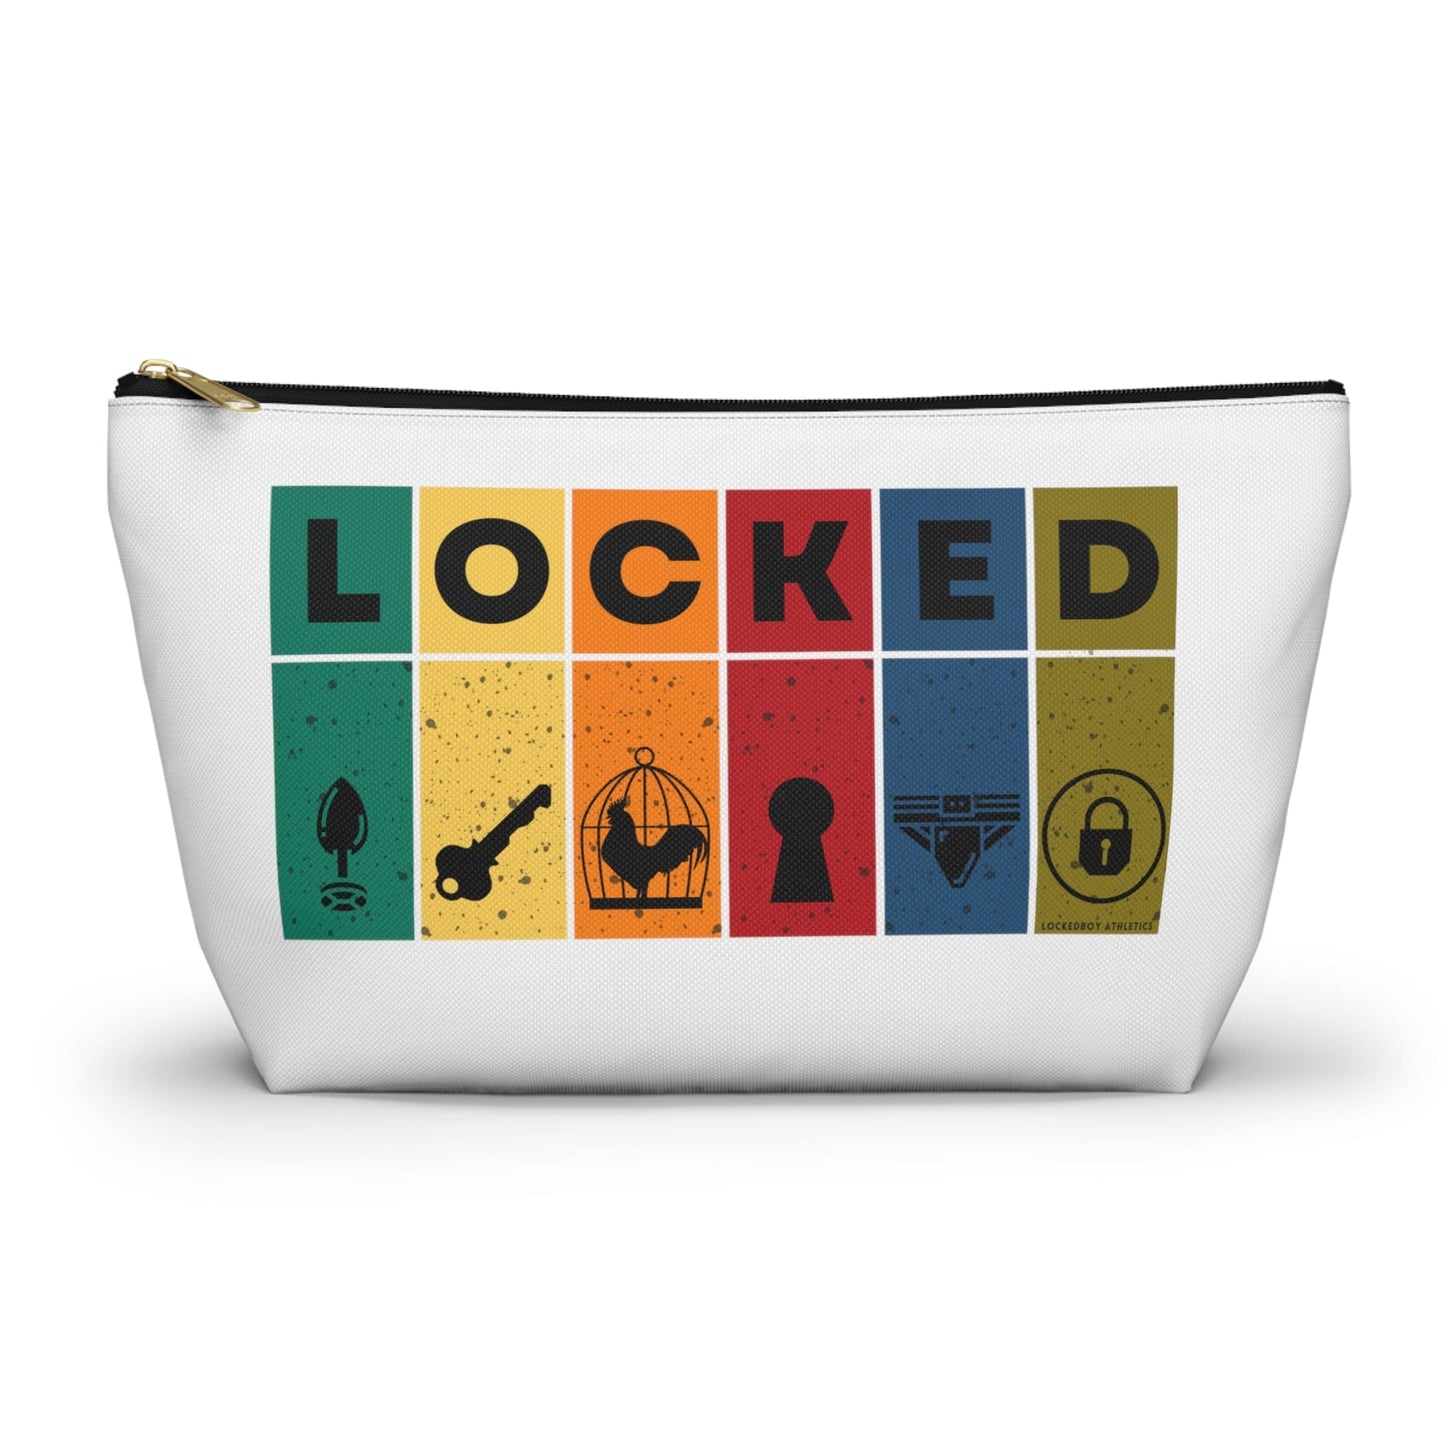 Bags Large / Black zipper Locked Blocks Chastity Pouch - Lockedboy Athletics LEATHERDADDY BATOR